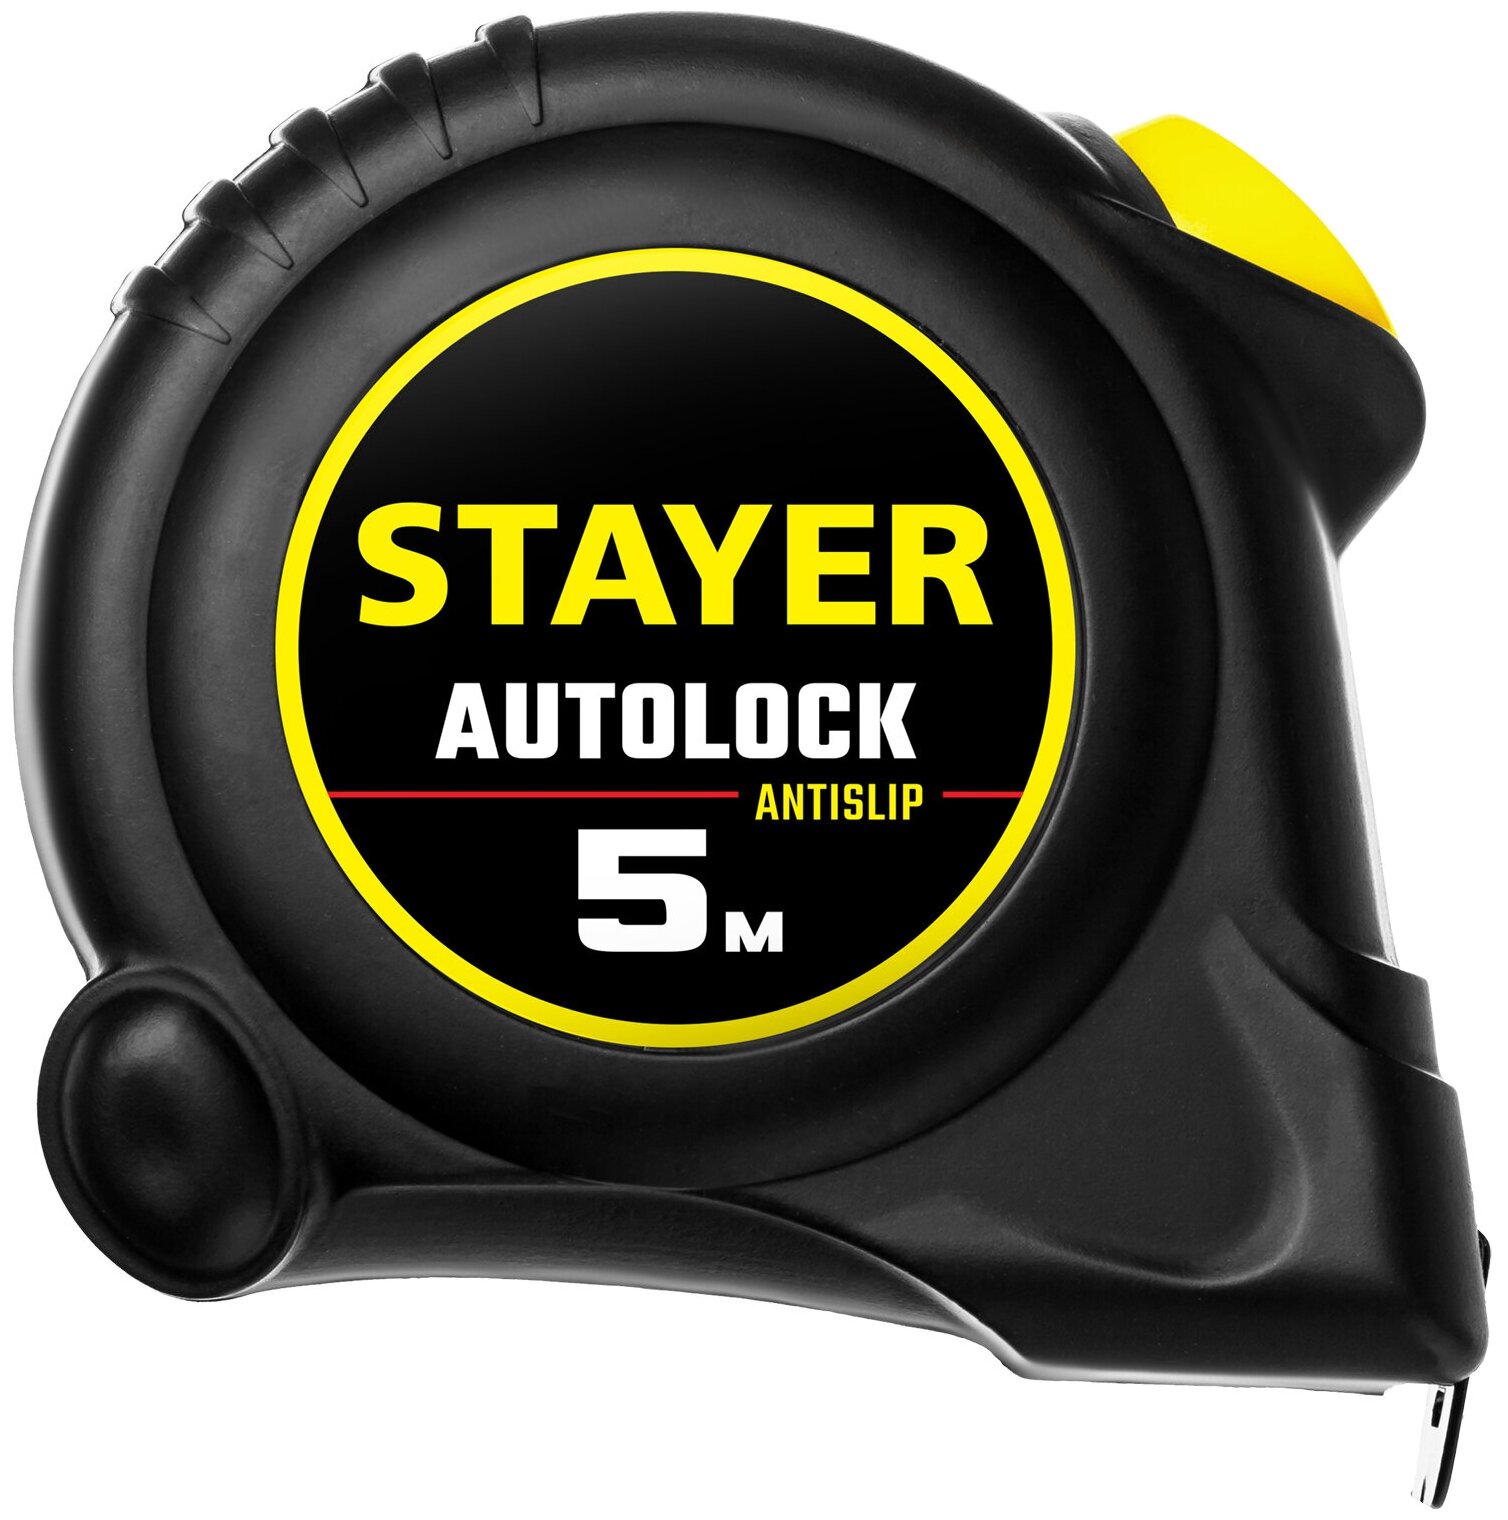 STAYER АutoLock 5м / 19мм рулетка с автостопом - фотография № 7